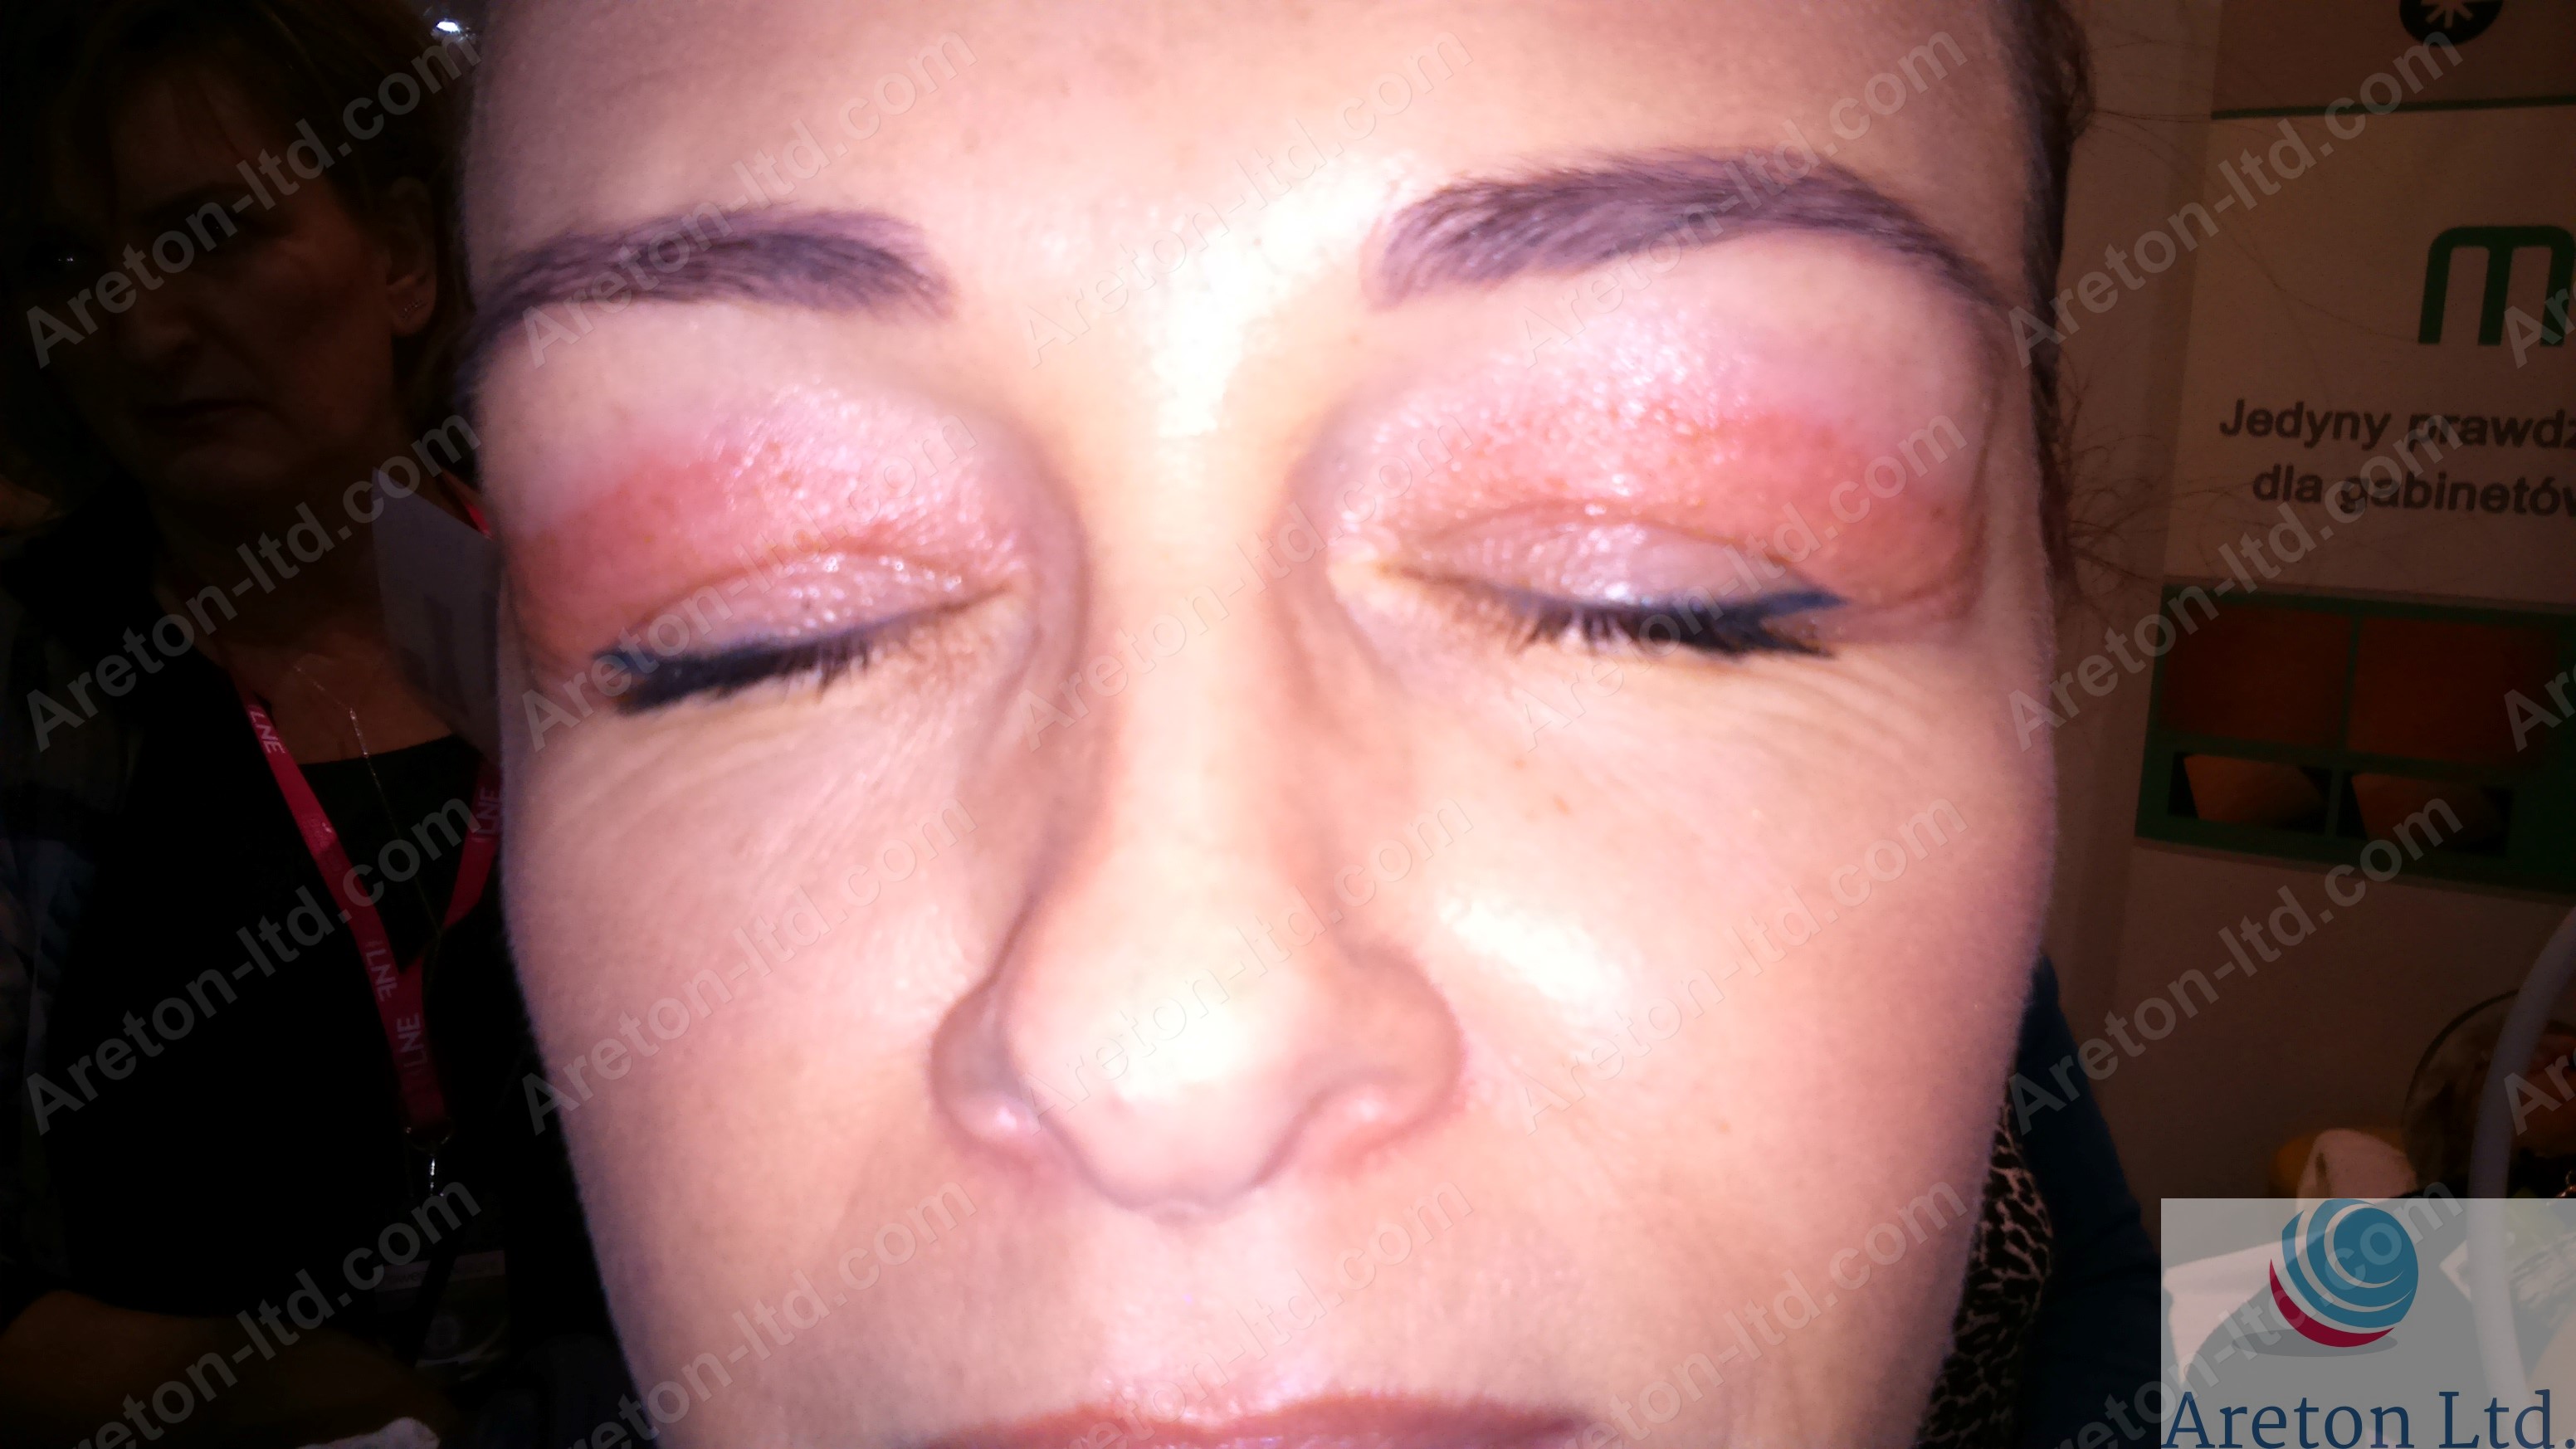 Lower eyelid tightening case study – VoltaicPlasma – Areton LTD